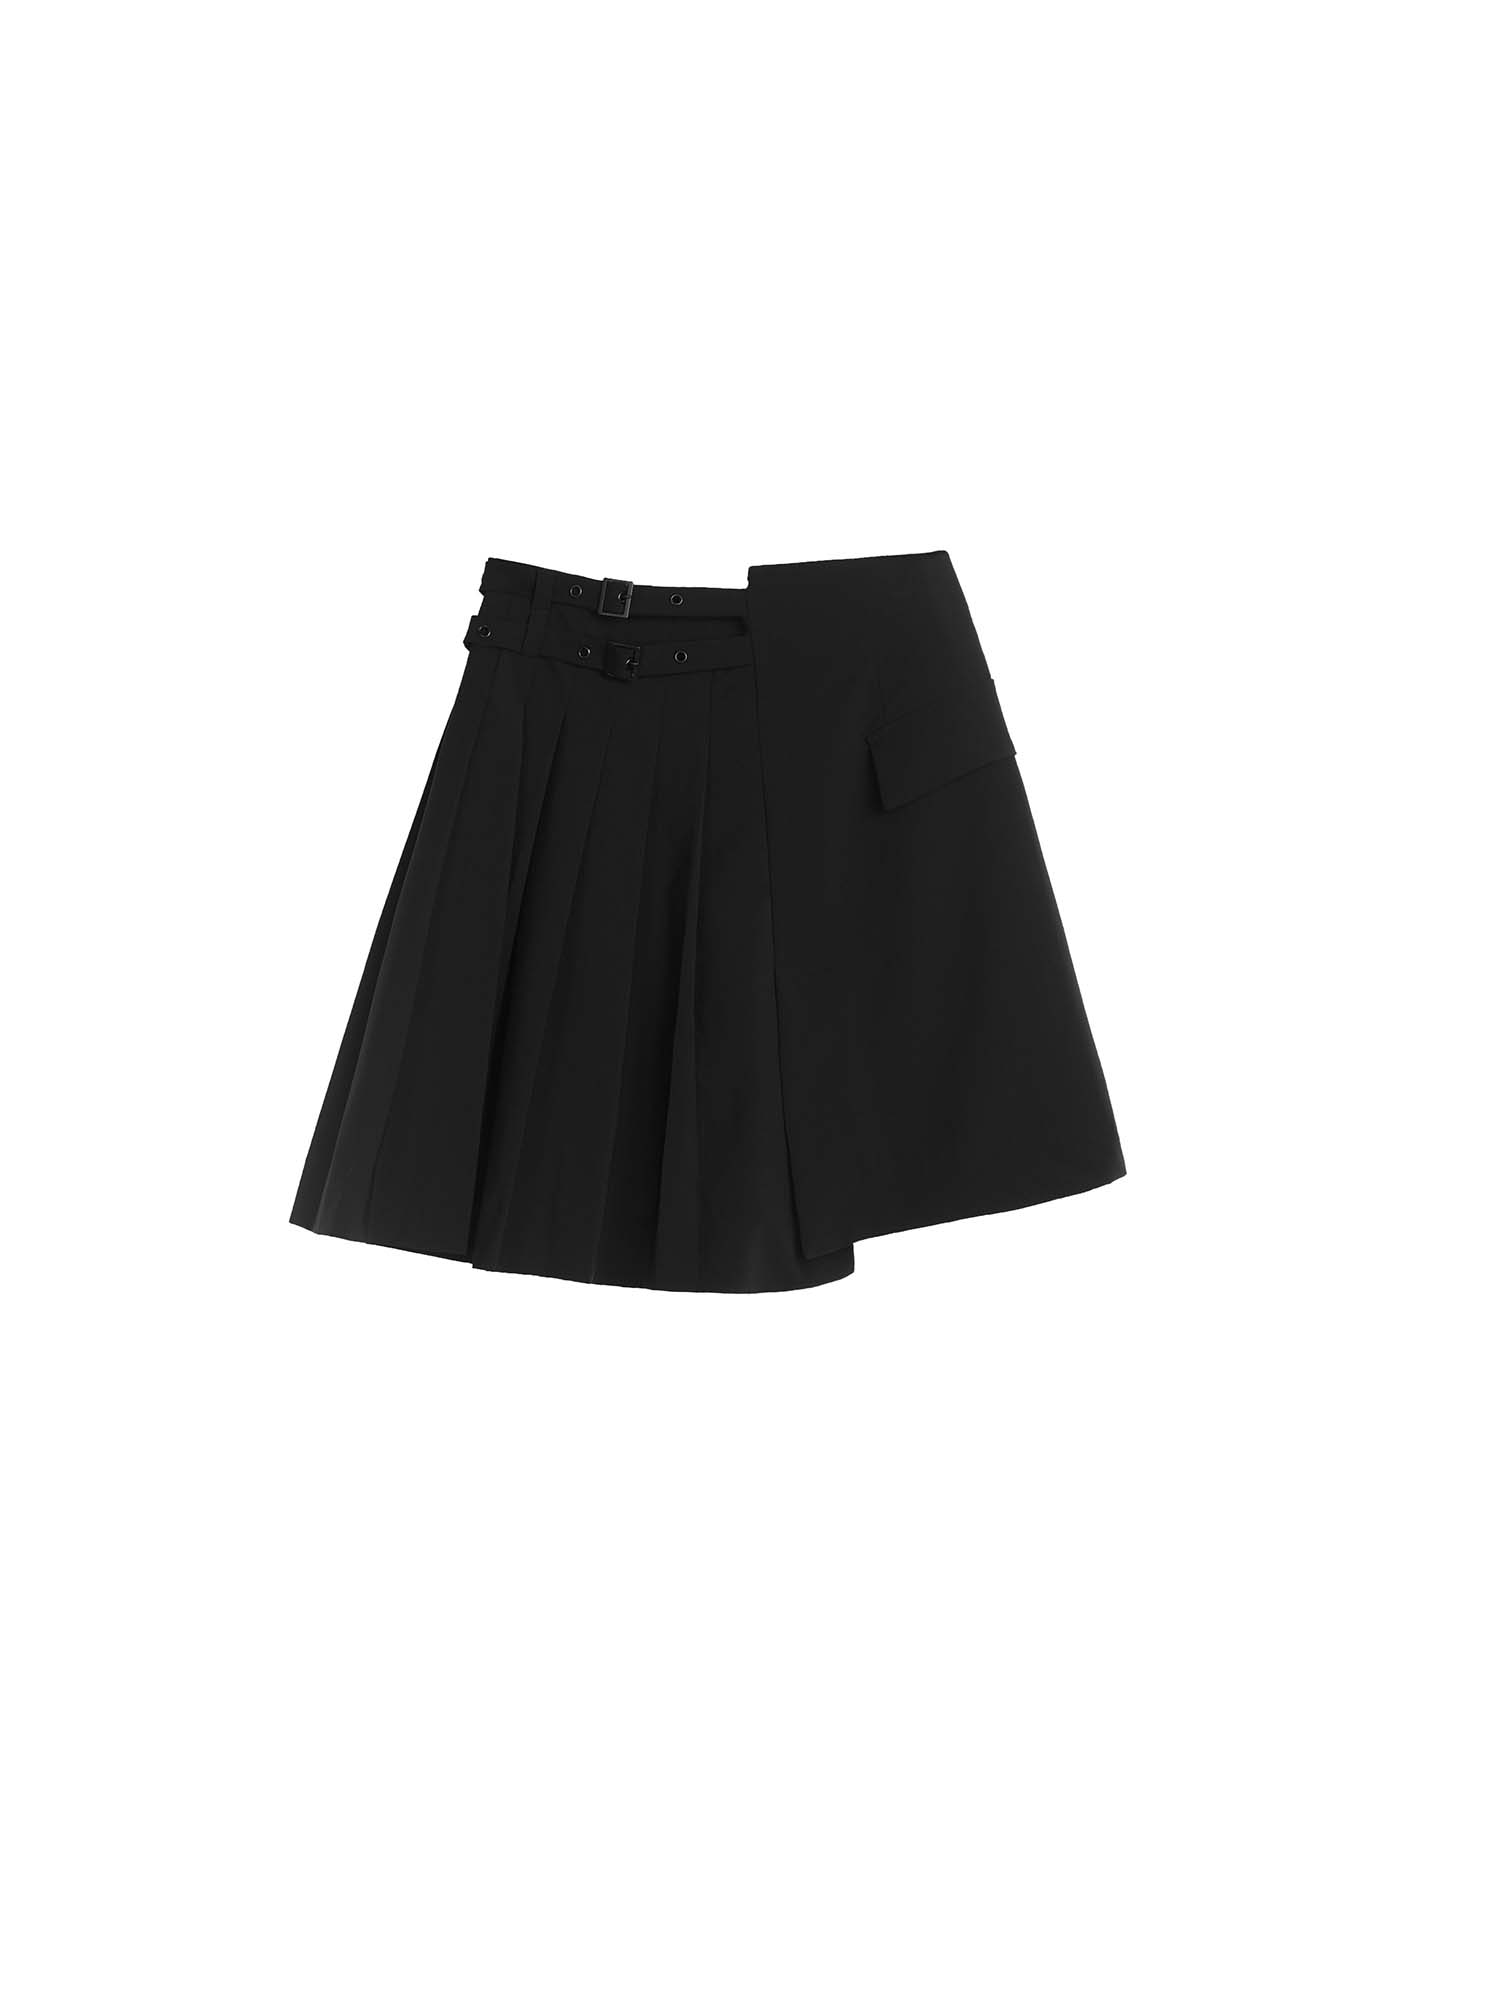 Irregular Pleated Black A-line Skirt - S·DEER